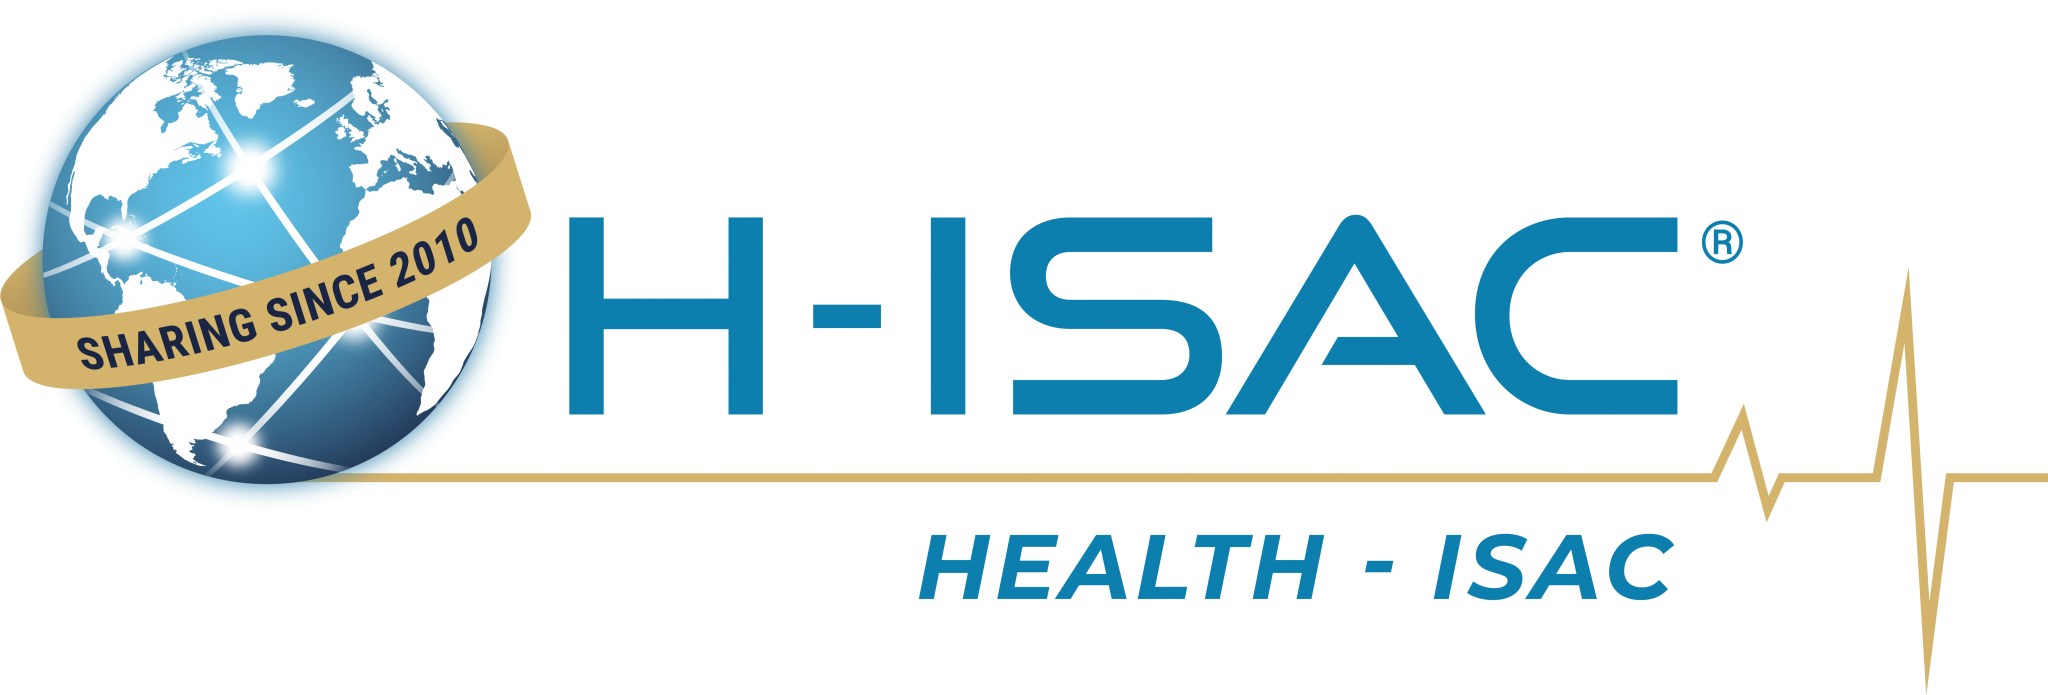 Health - ISAC, sharing since 2010